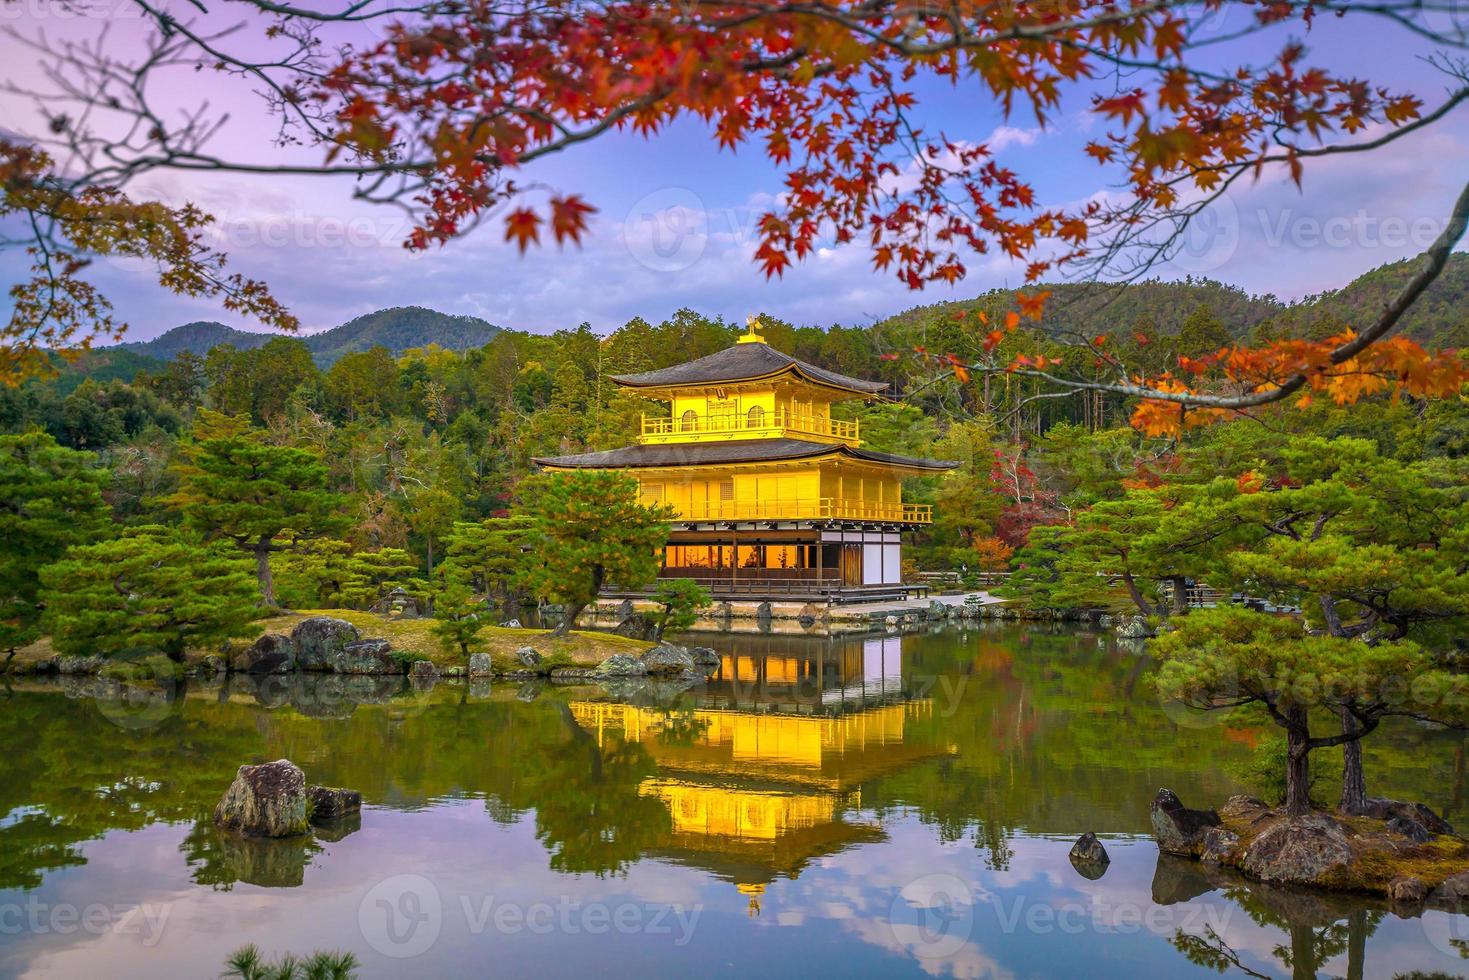 der goldene pavillon des kinkaku-ji-tempels in kyoto, japan foto